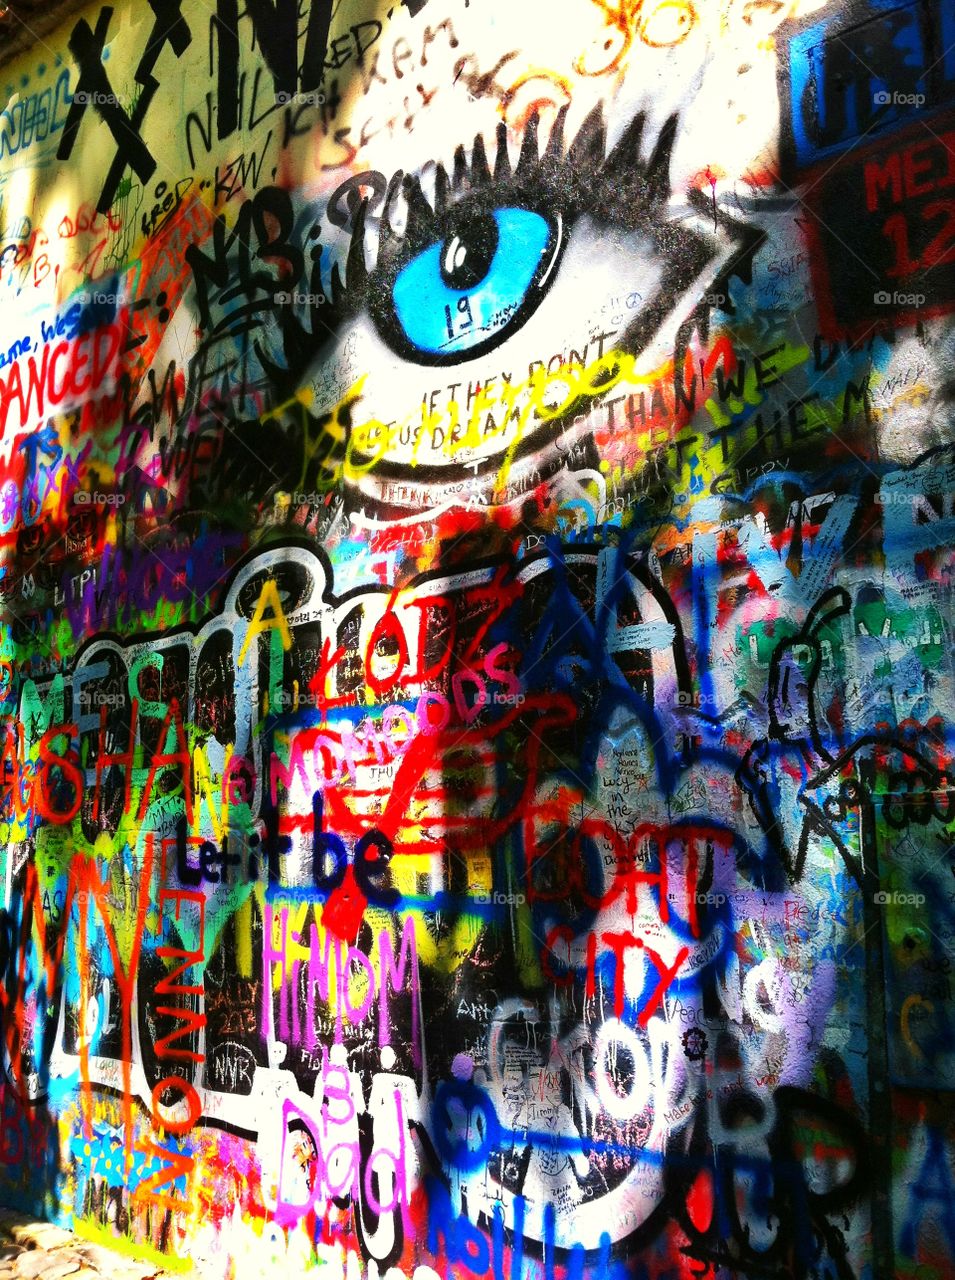 John Lennon wall of graffiti Prague, Czech Republic 